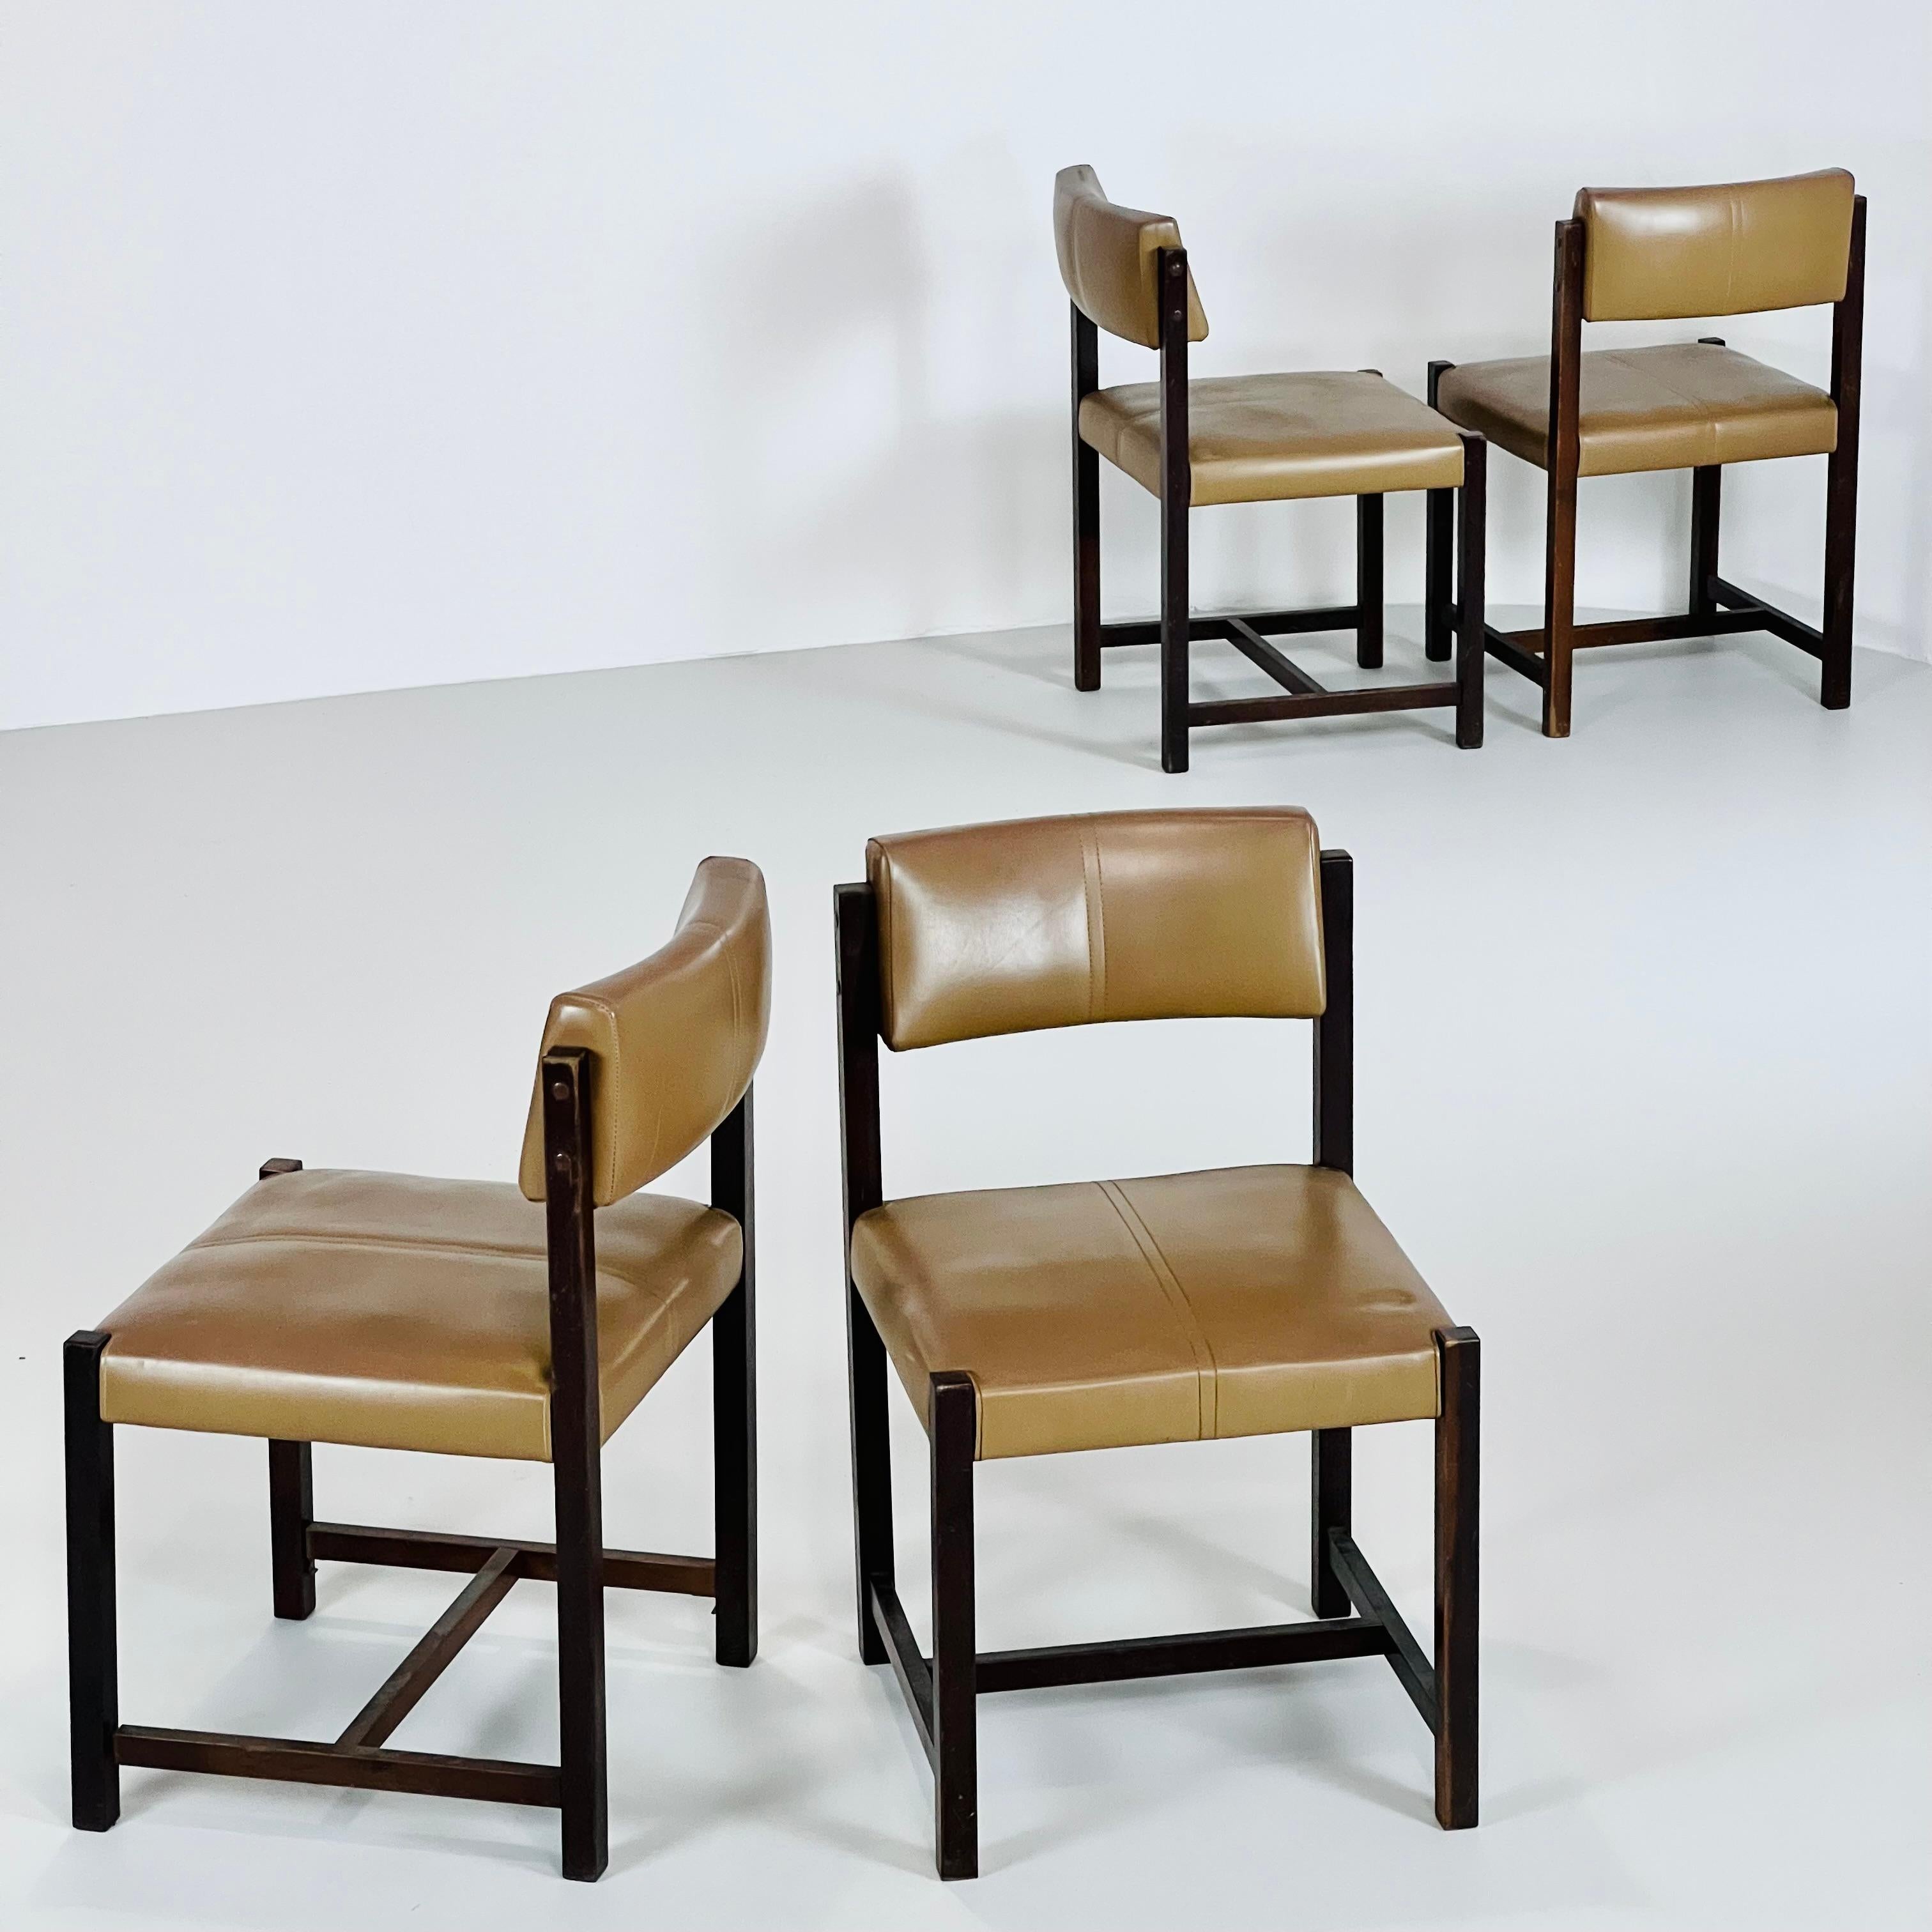 Mid-20th Century Set of 12 'Del Rey' Dining Room Chairs Designer Jorge Zalszupin 1960 Brazil